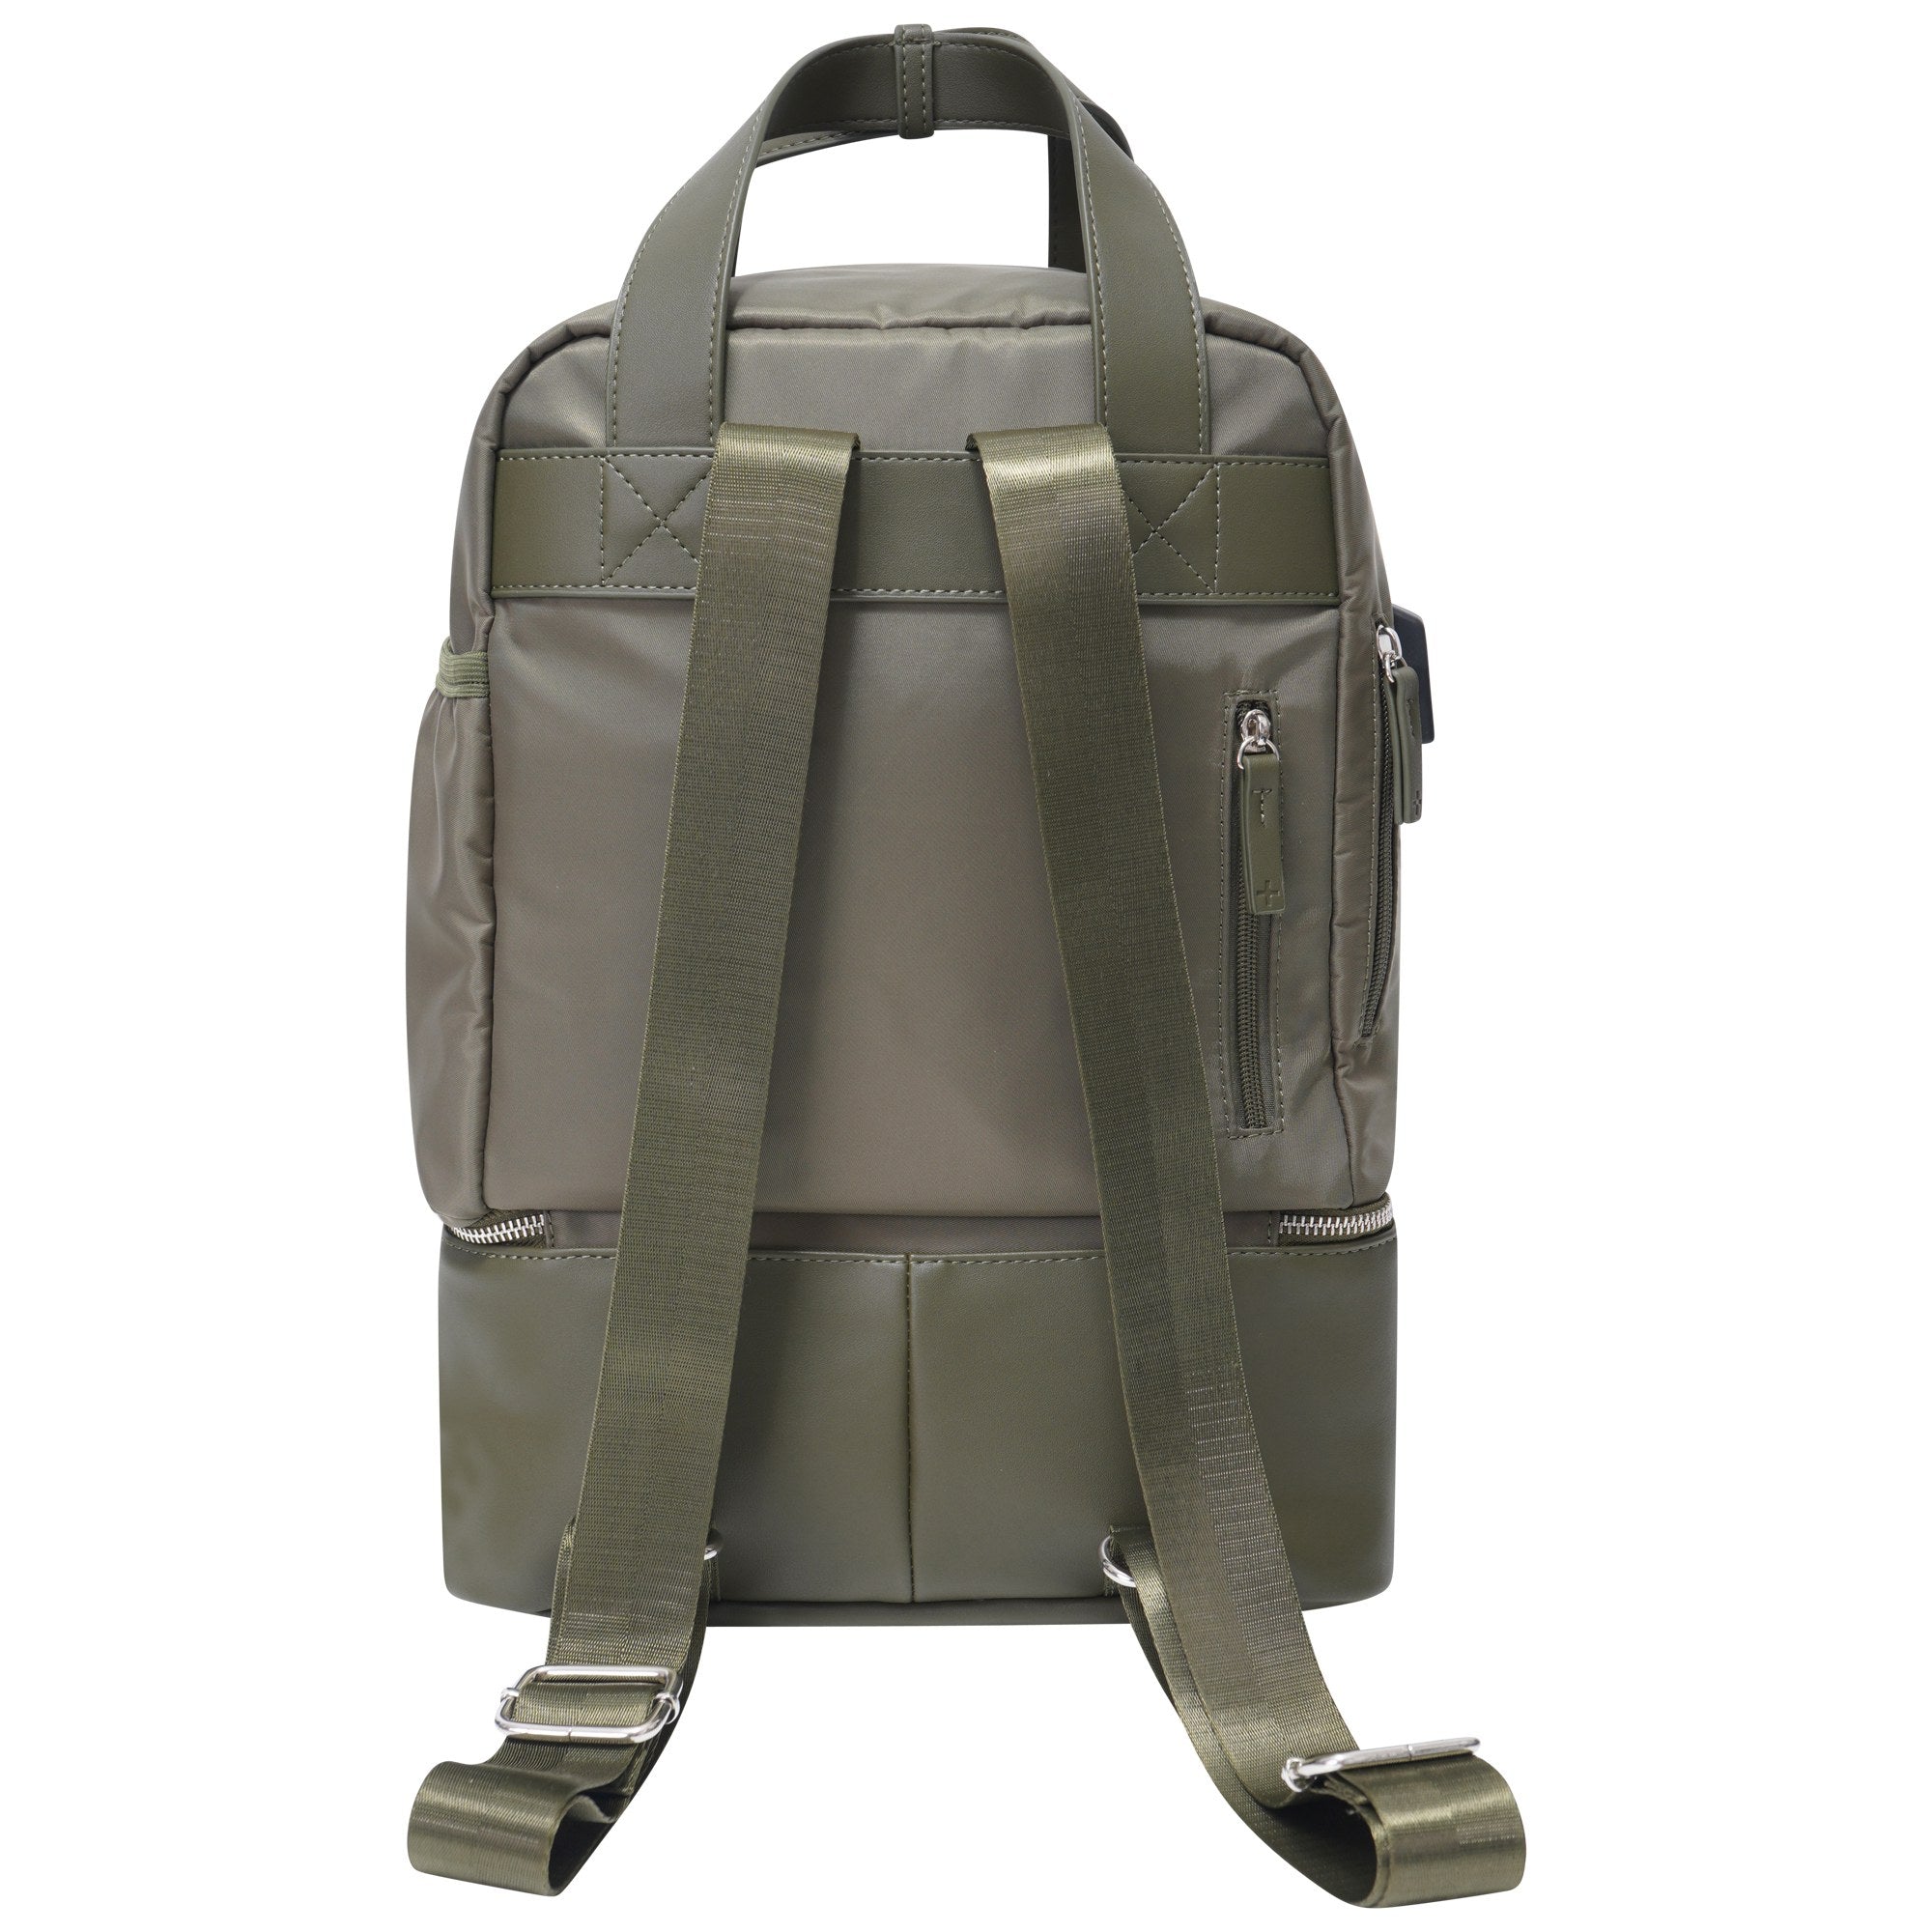 Stash+Stow Original Backpack